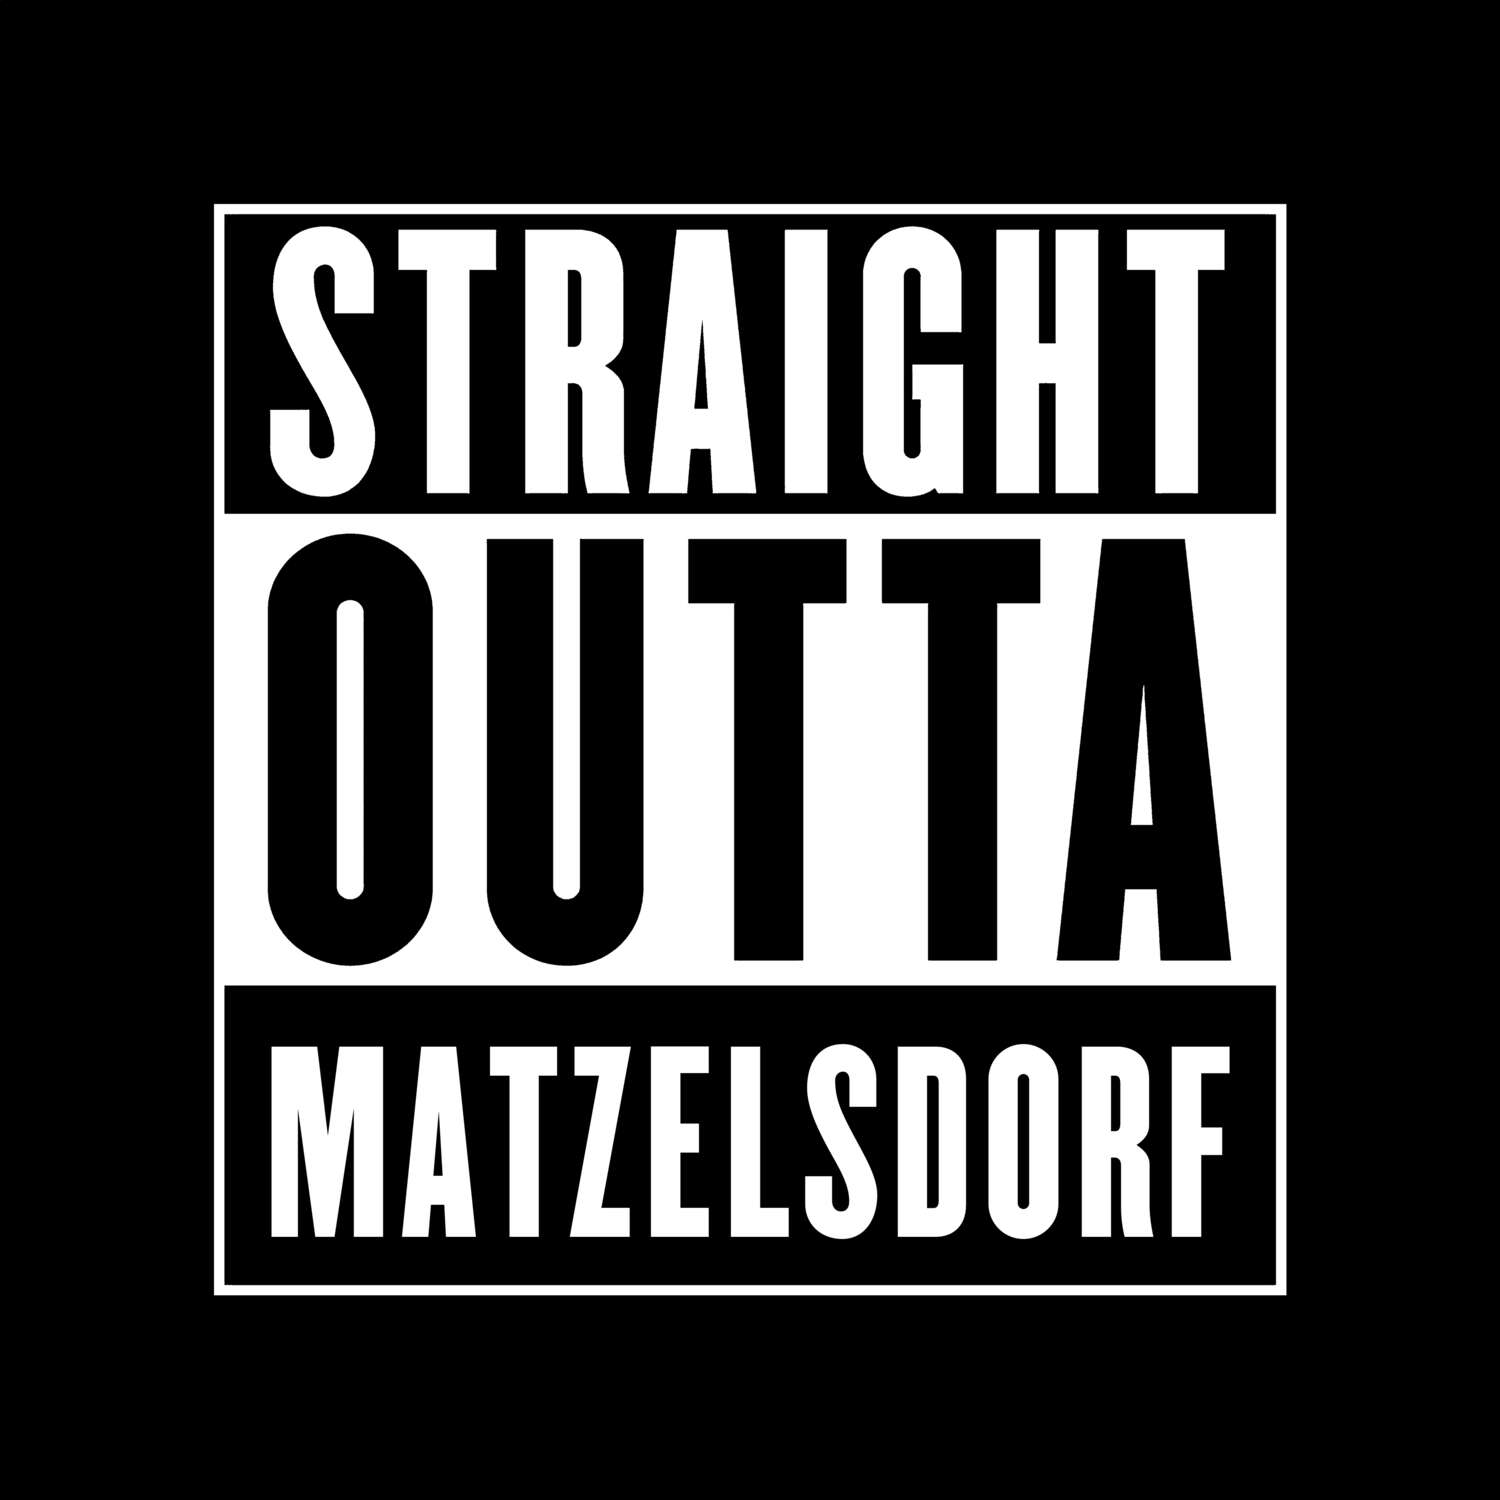 Matzelsdorf T-Shirt »Straight Outta«